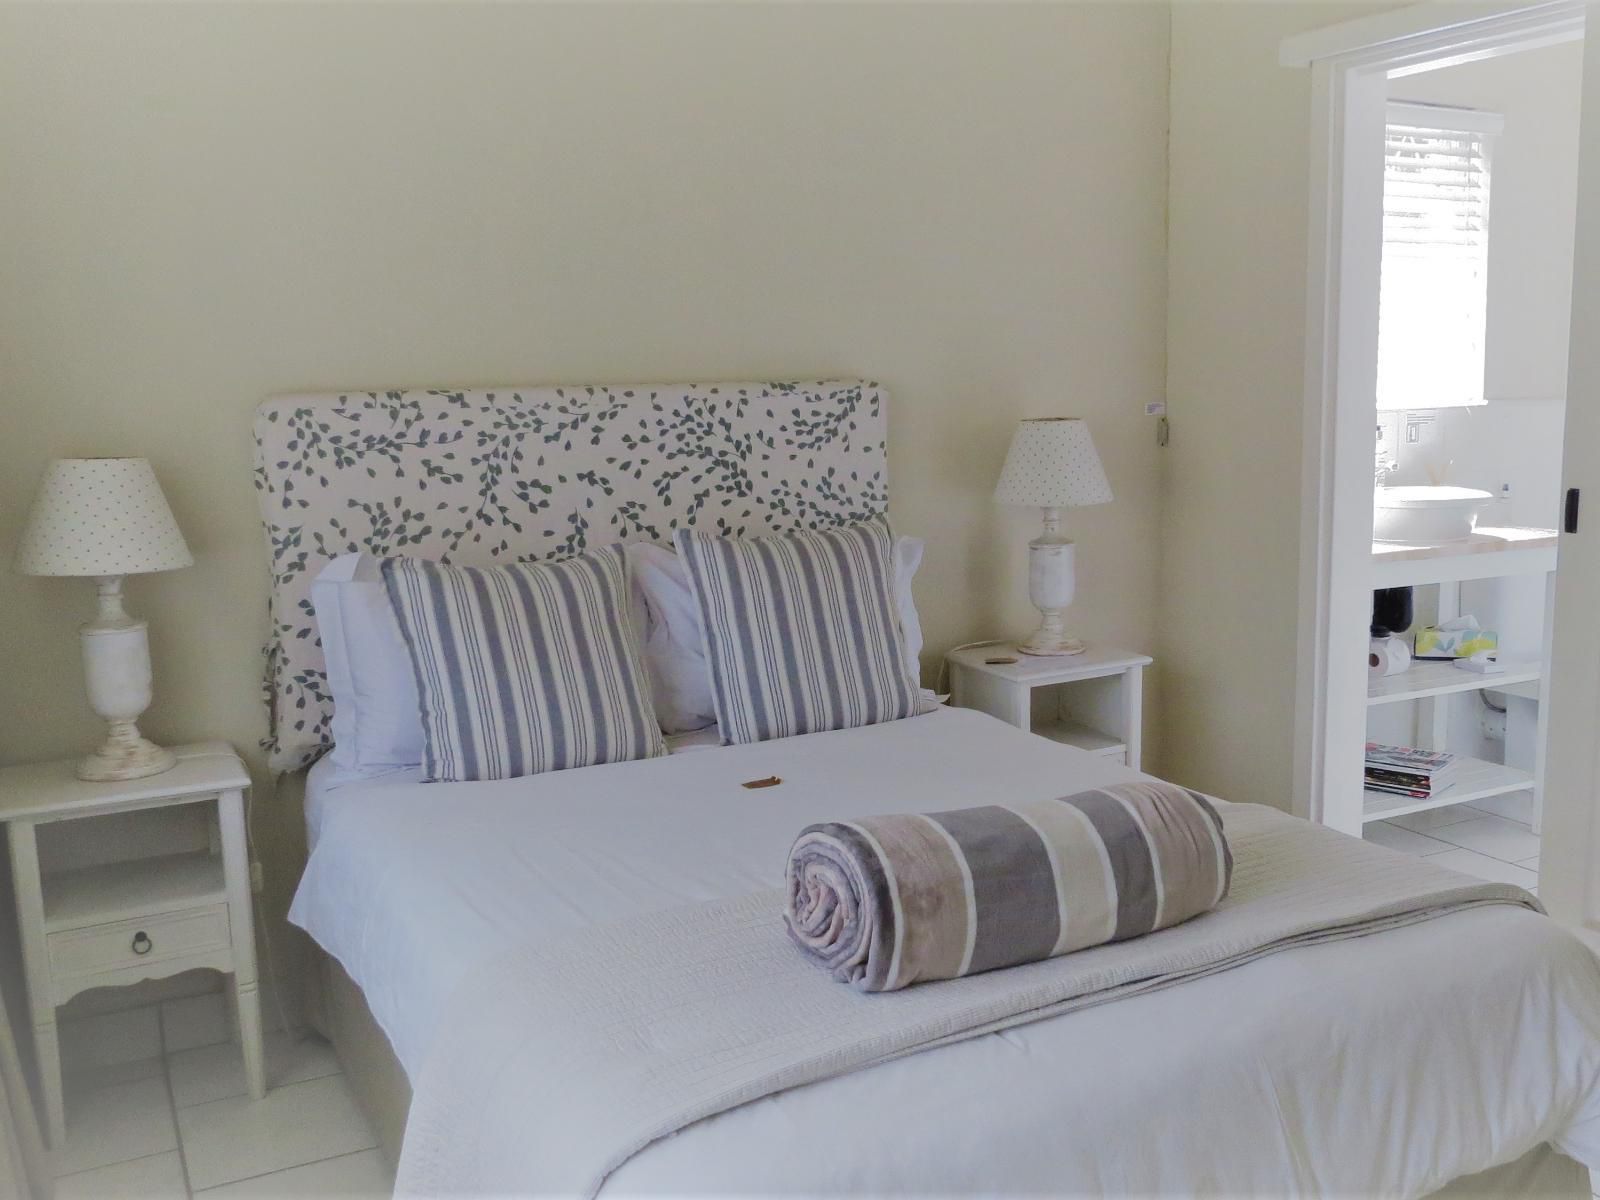 Avilla House Westville Durban Kwazulu Natal South Africa Colorless, Bedroom